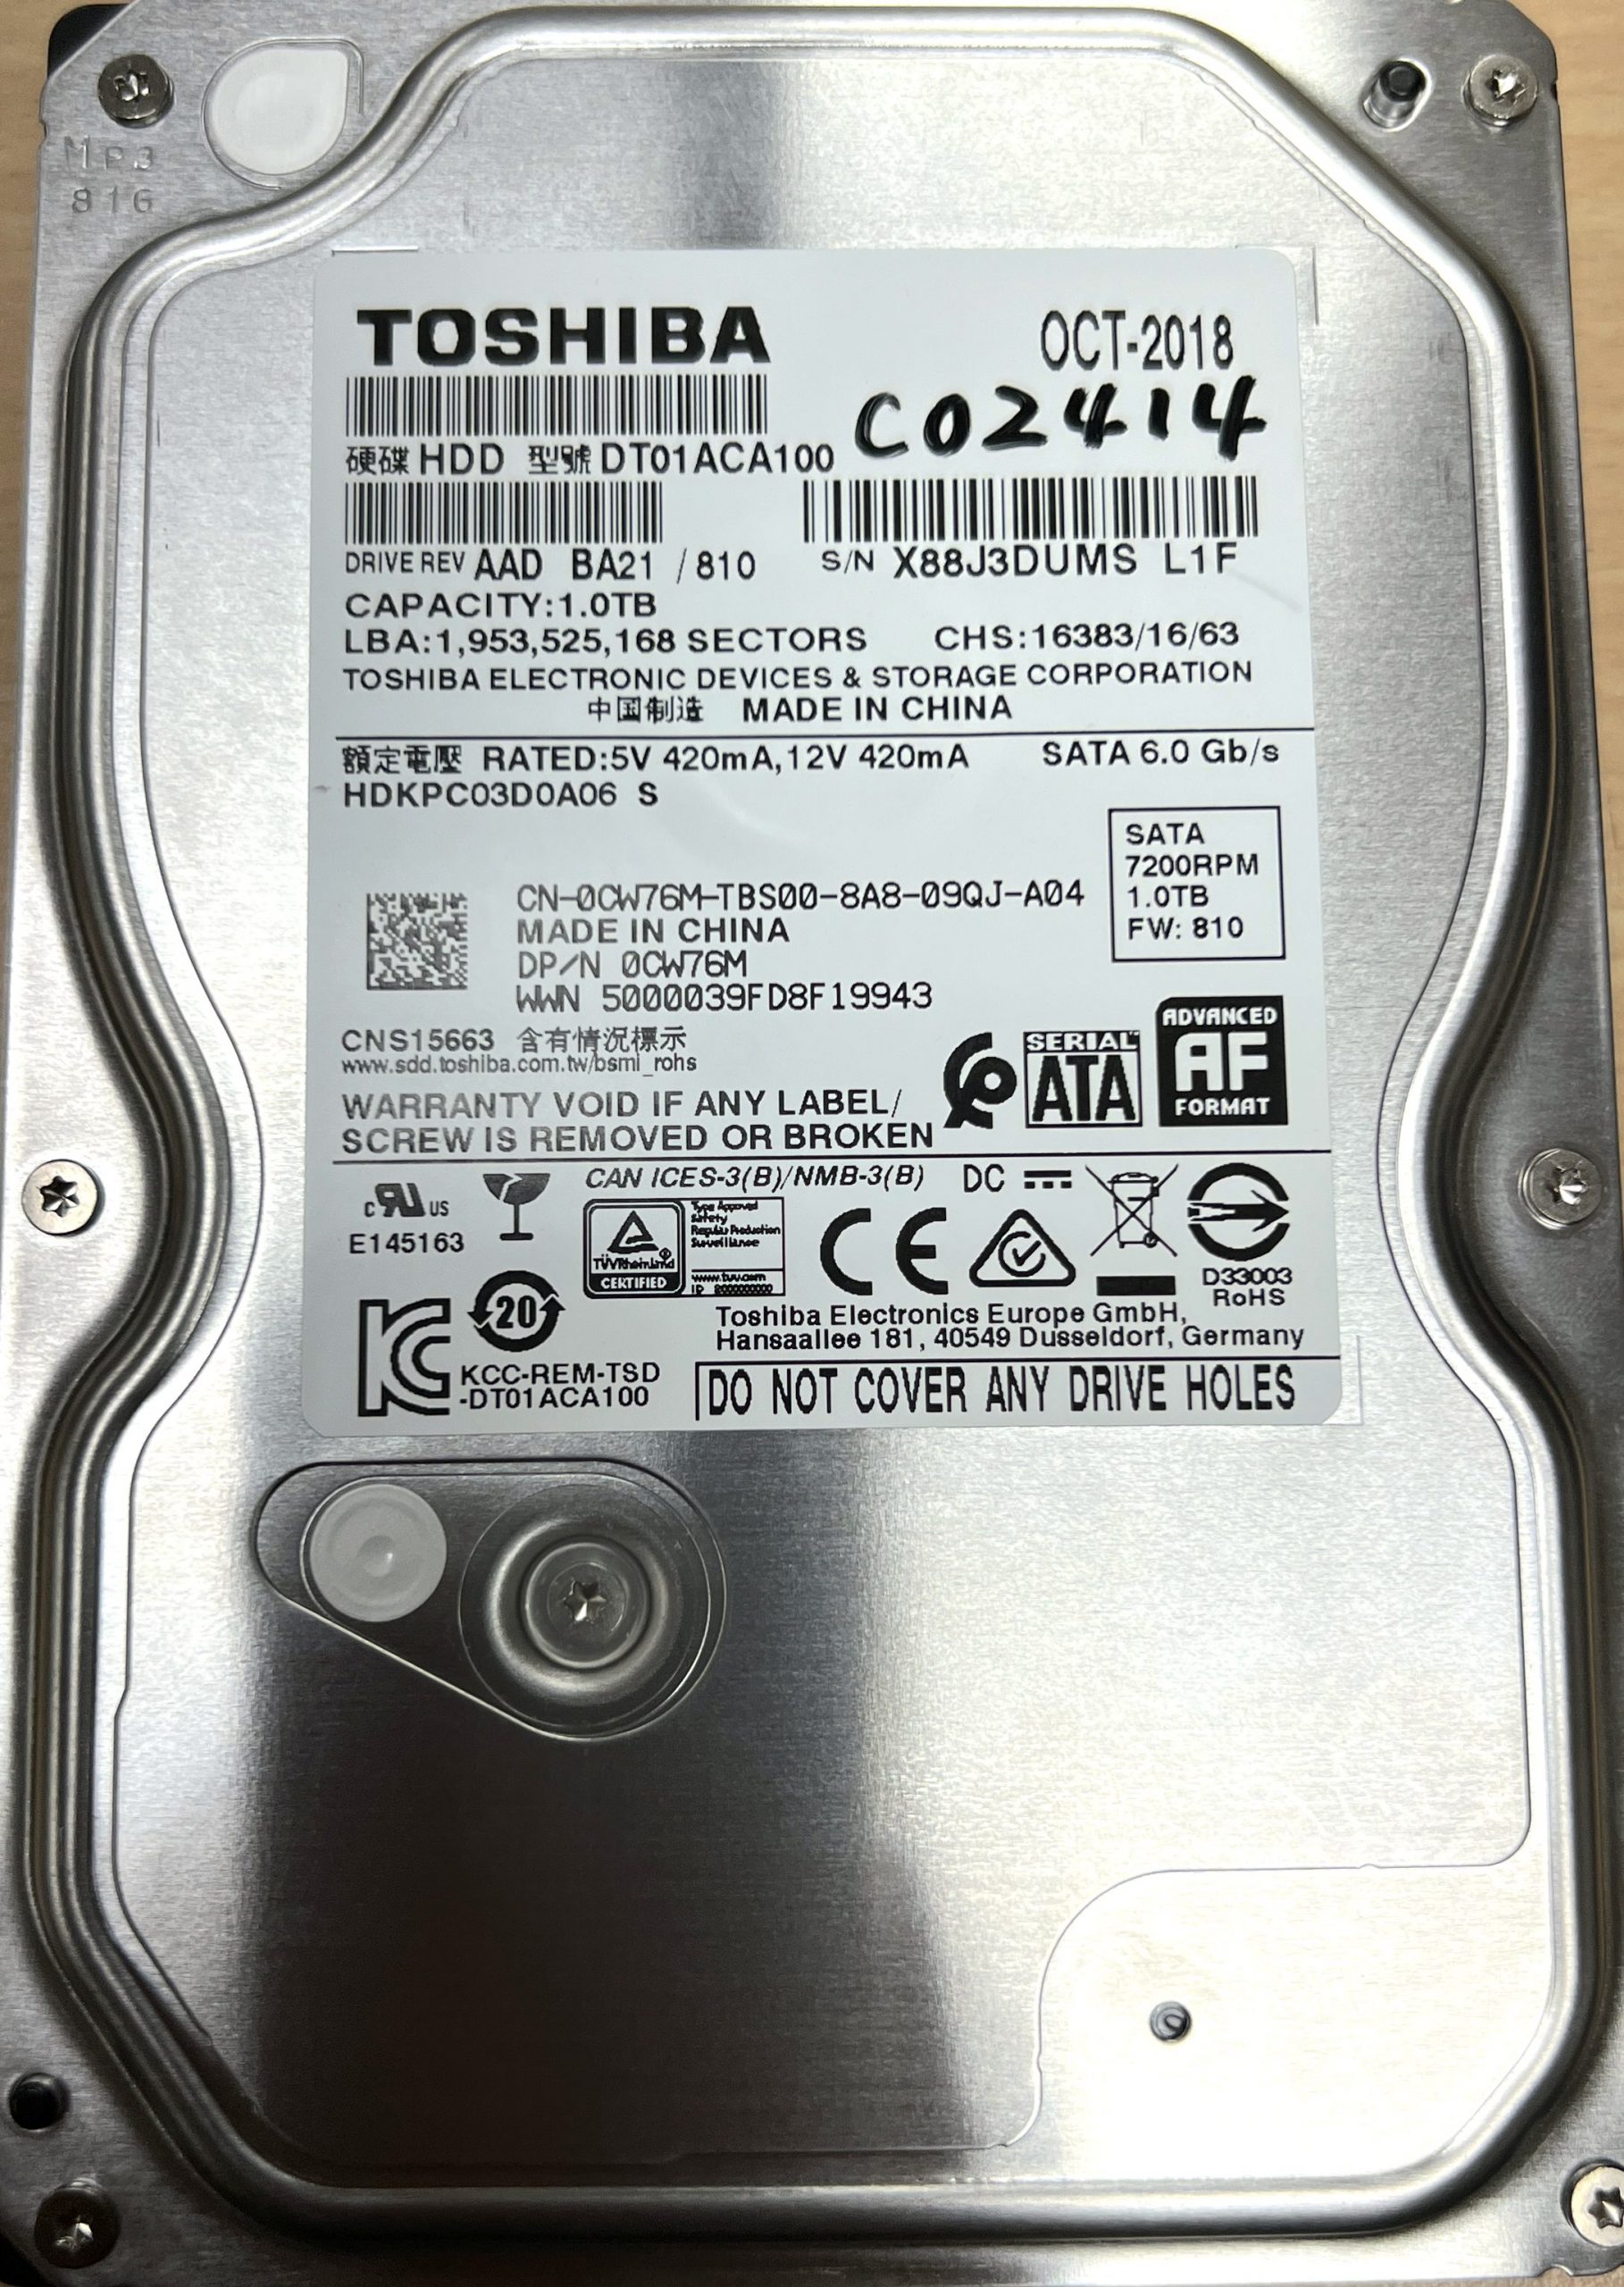 Toshiba DT01ACA100 1TB